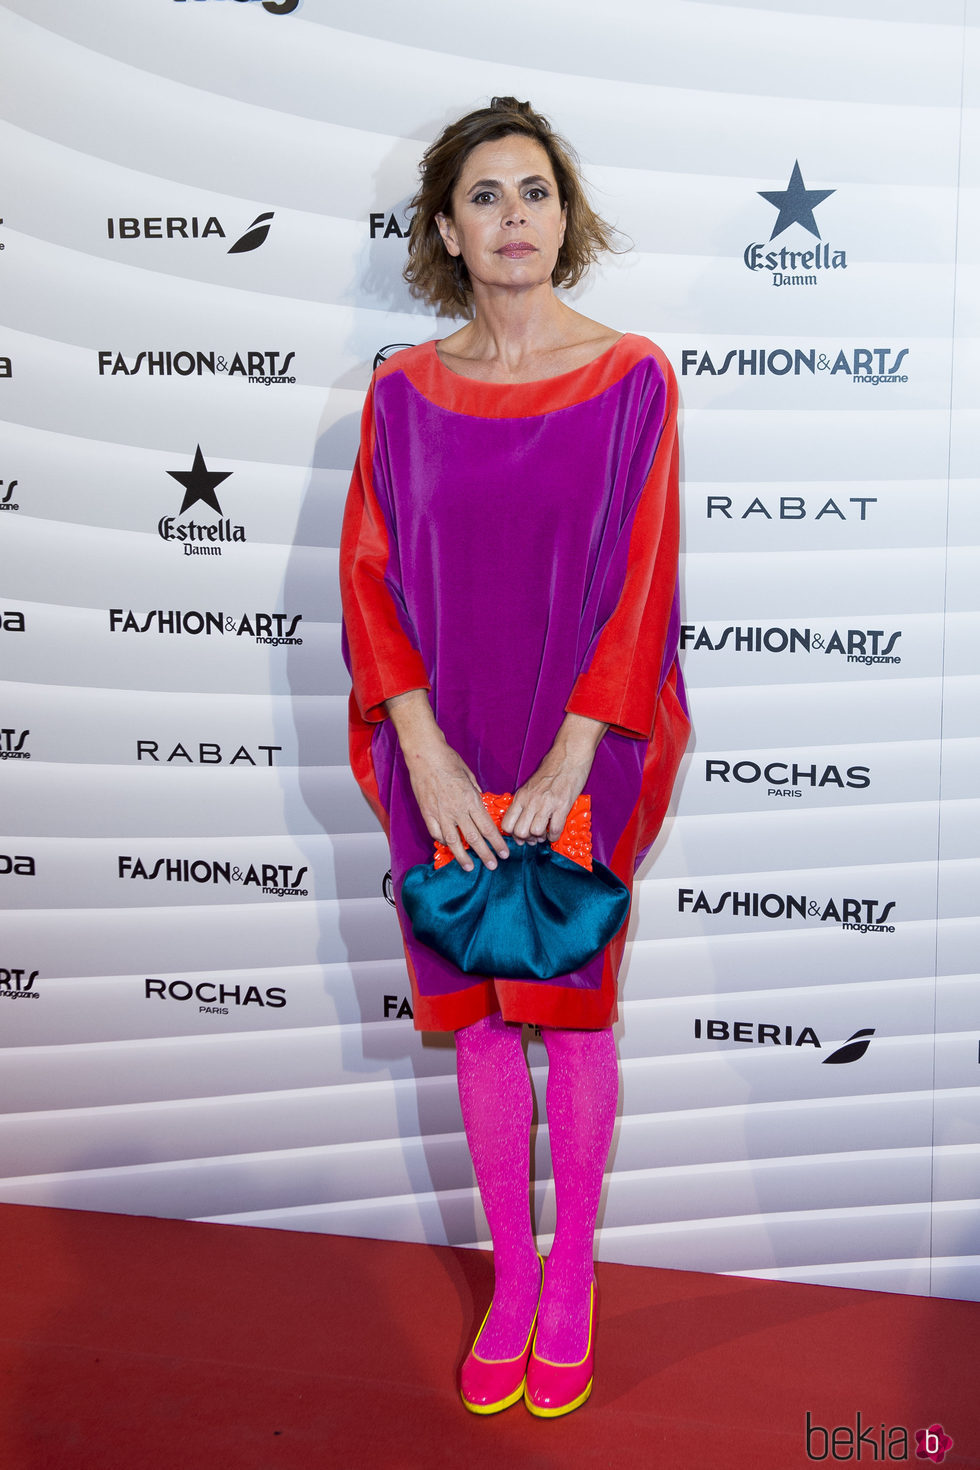 Ágatha Ruiz de la Prada en la fiesta del primer aniversario de Magazine Fashion & Arts